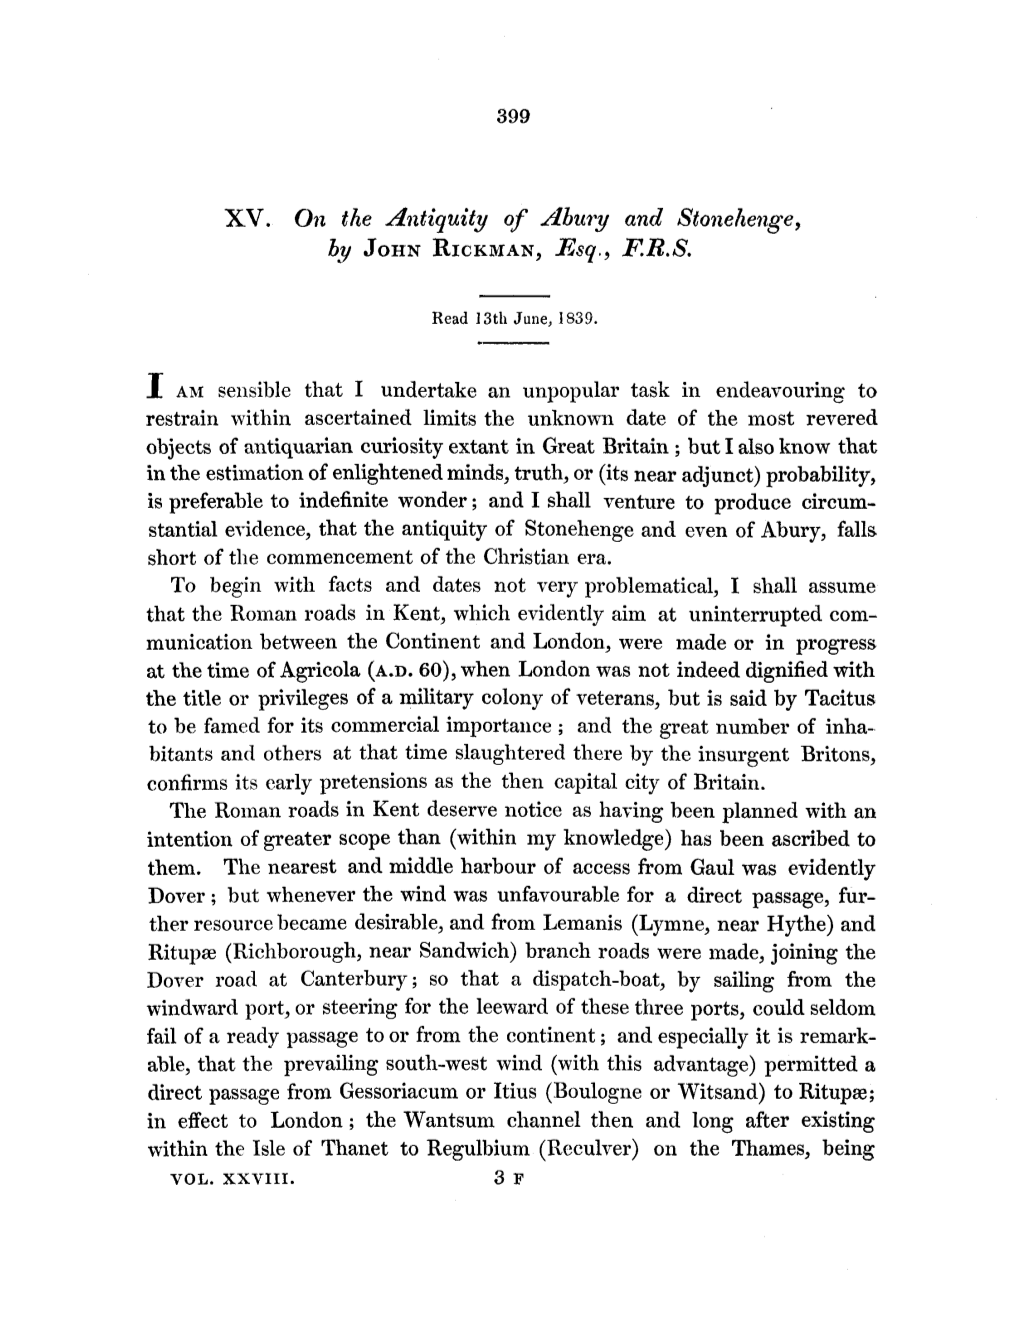 XV. on the Antiquity of Abury and Stonehenge, by JOHN RICKMAN, Esq., F.R.S